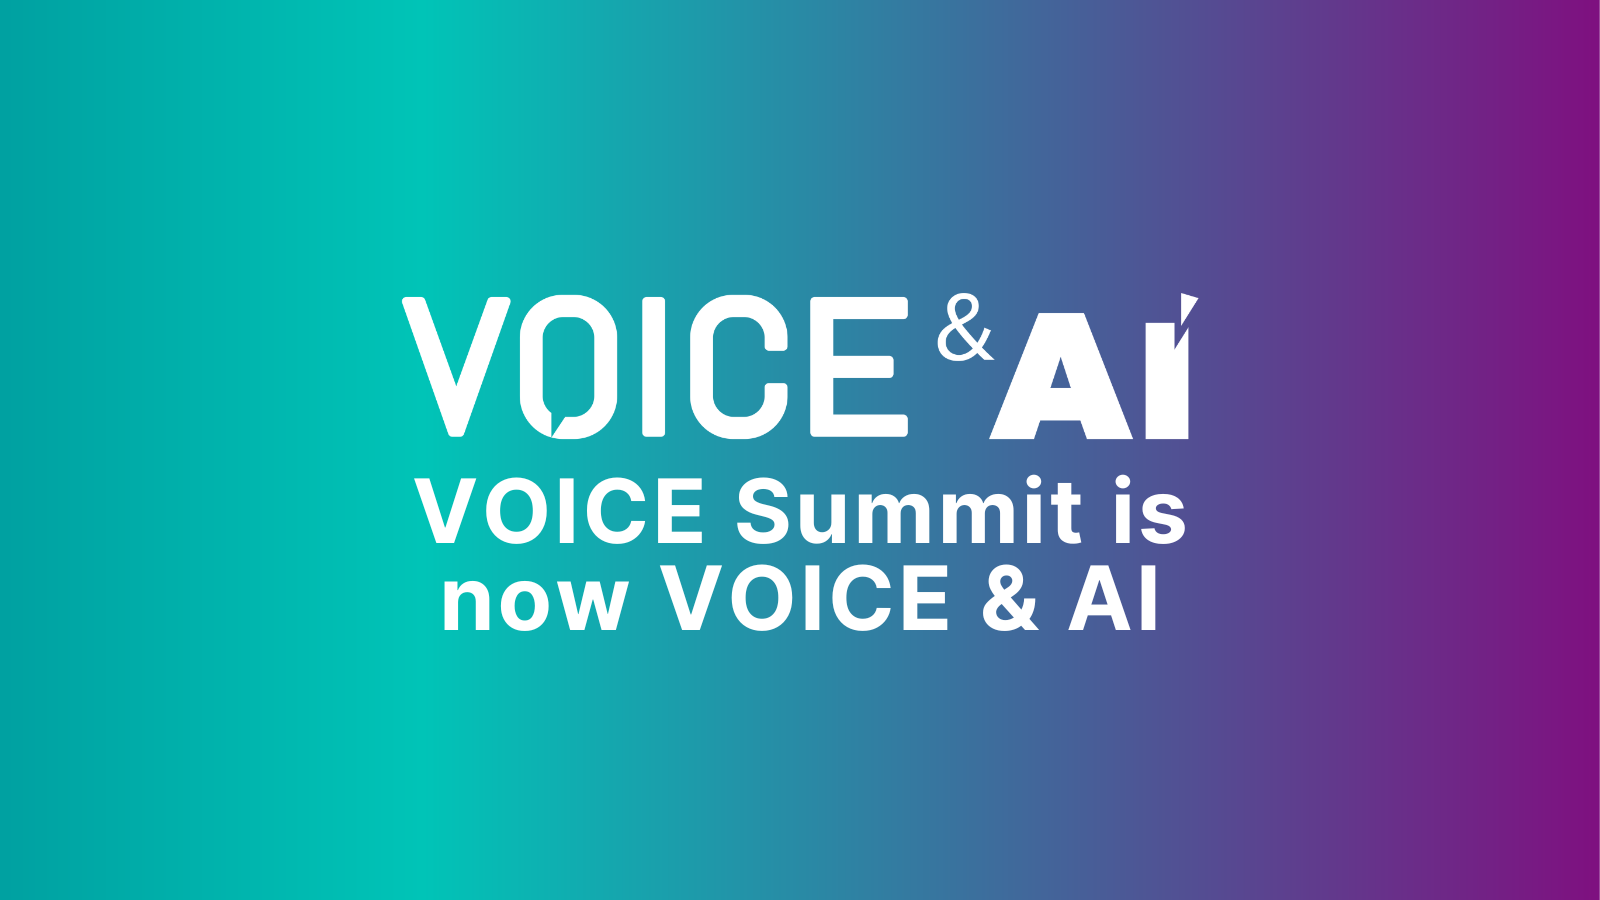 VOICE Summit is now VOICE & AI